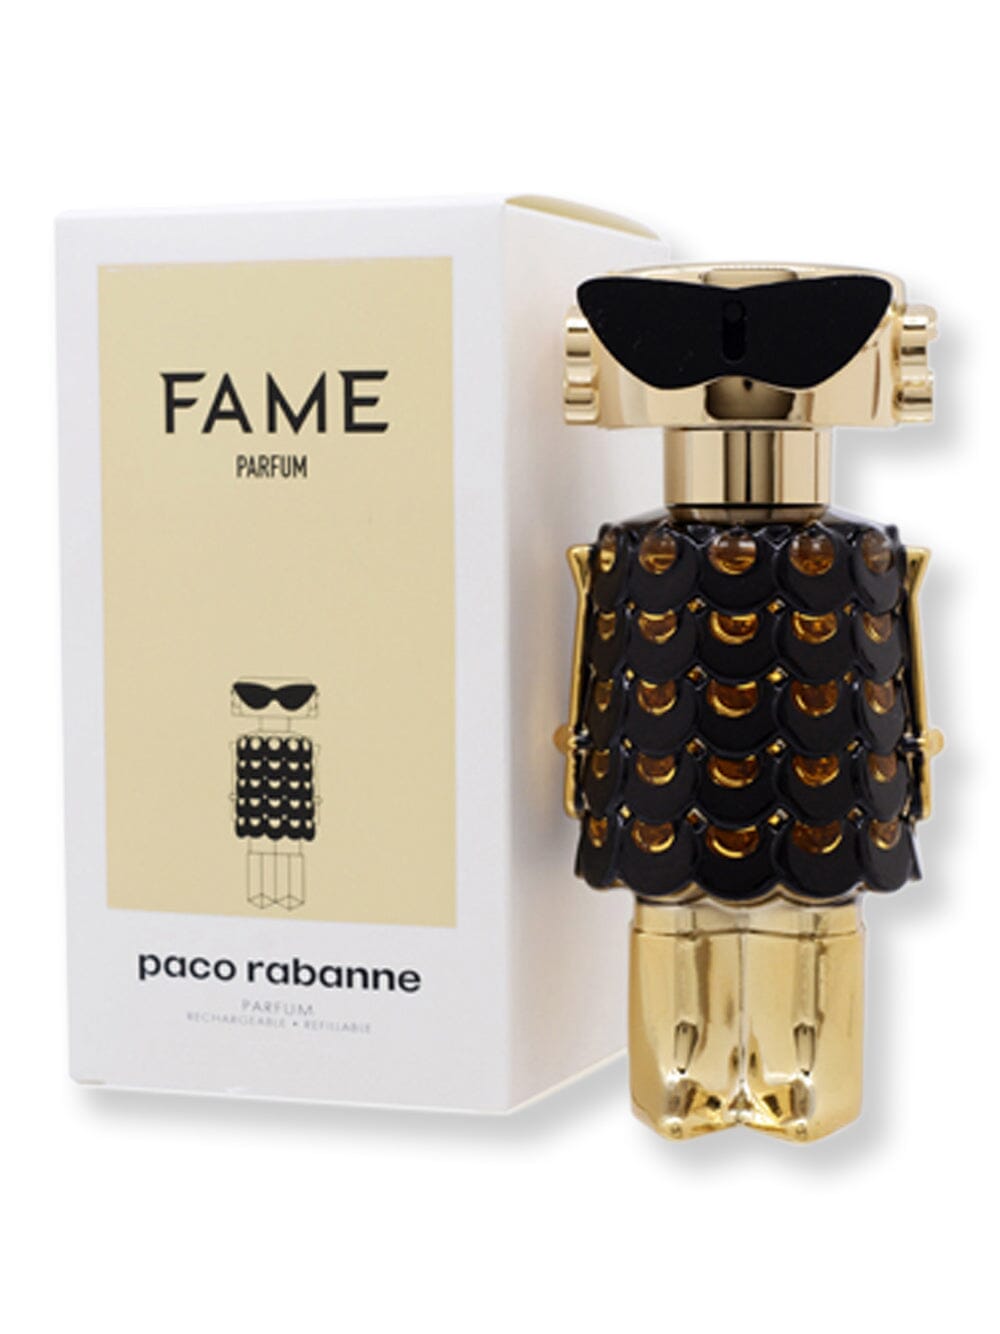 Paco Rabanne Paco Rabanne Fame Parfum Spray Refillable 2.7 oz80 ml Perfume 